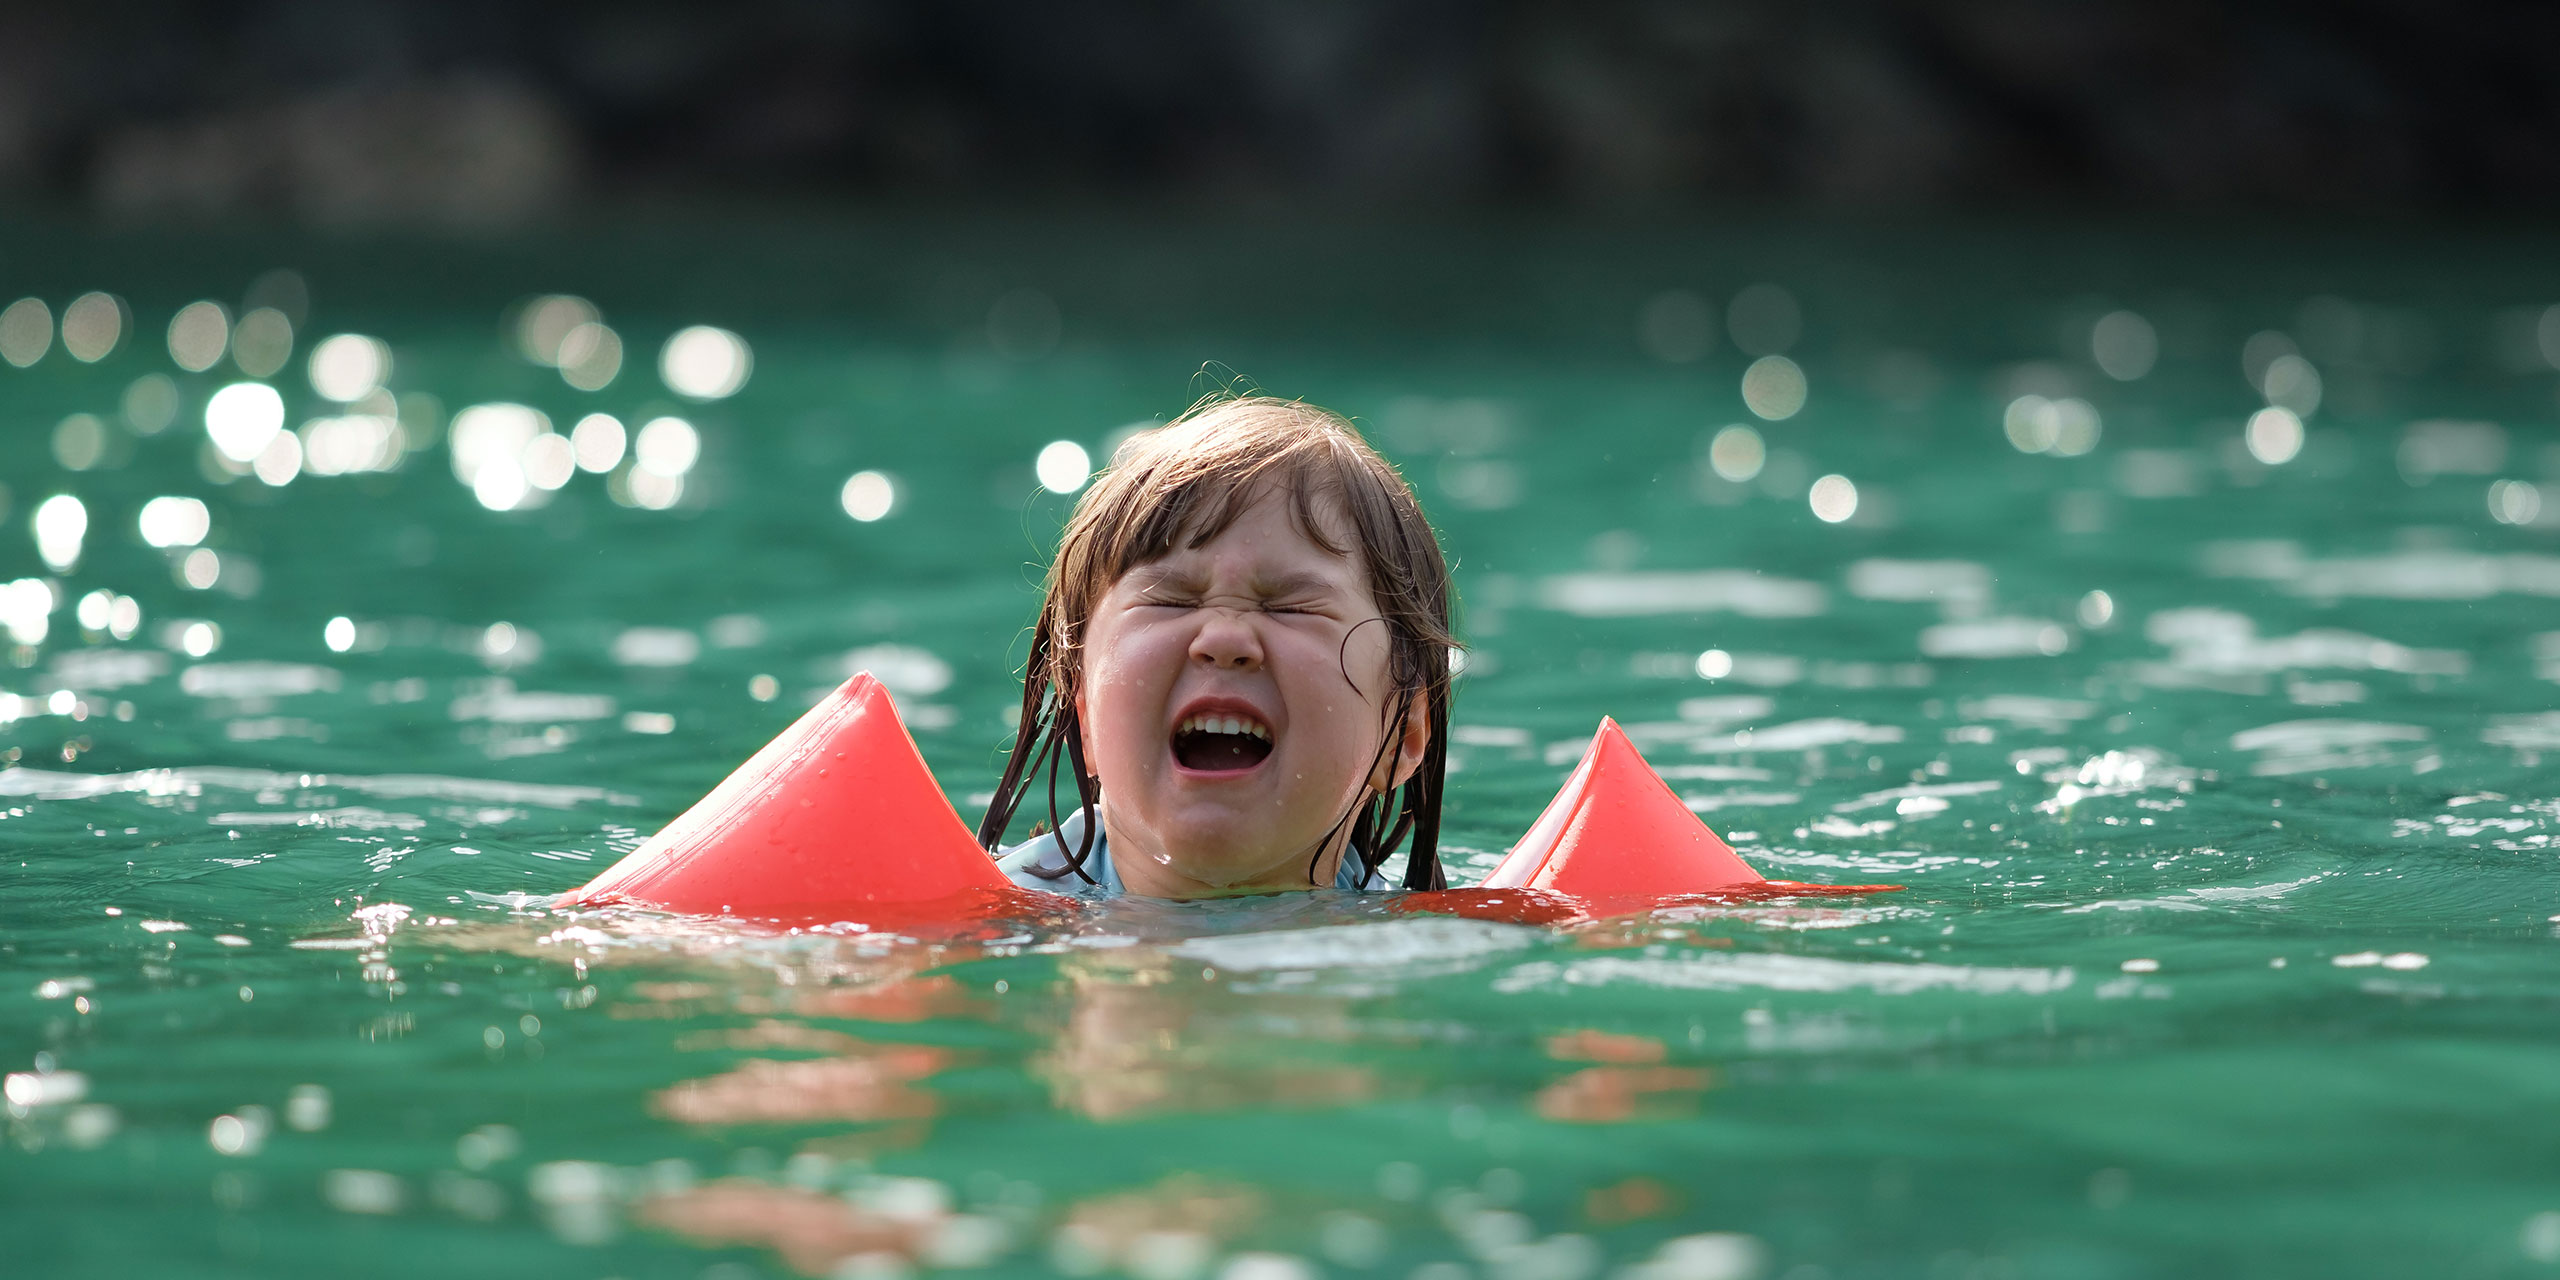 Crying Girl in Pool; Benoist/Shutterstock.com